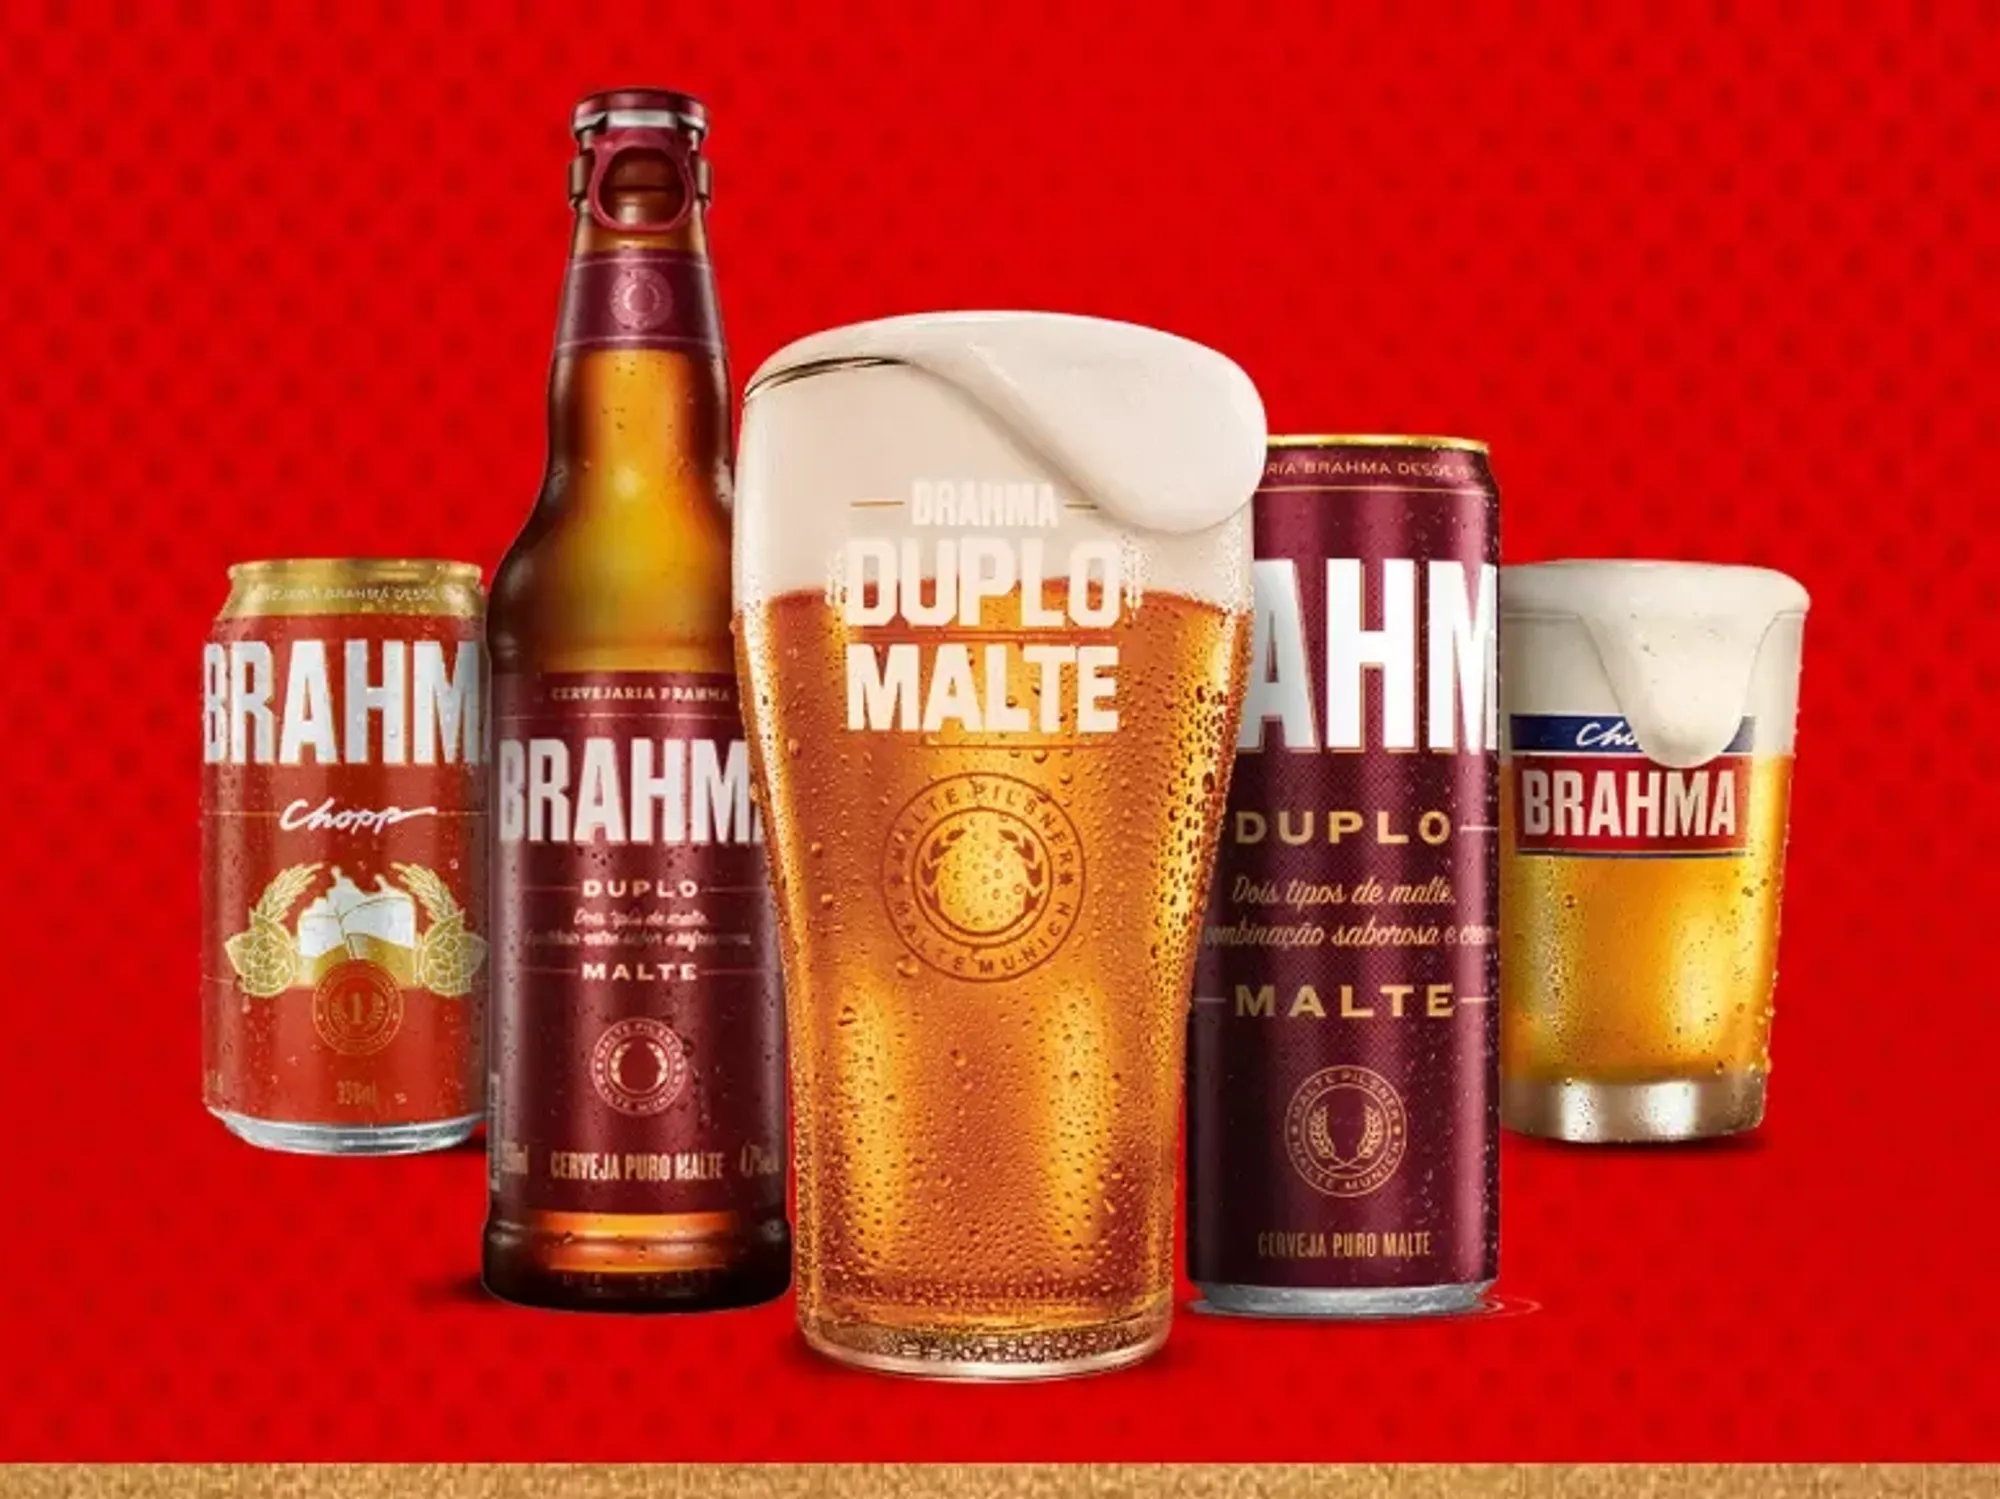 Promotional photo featuring Brazilian 'Brahma' Beer.